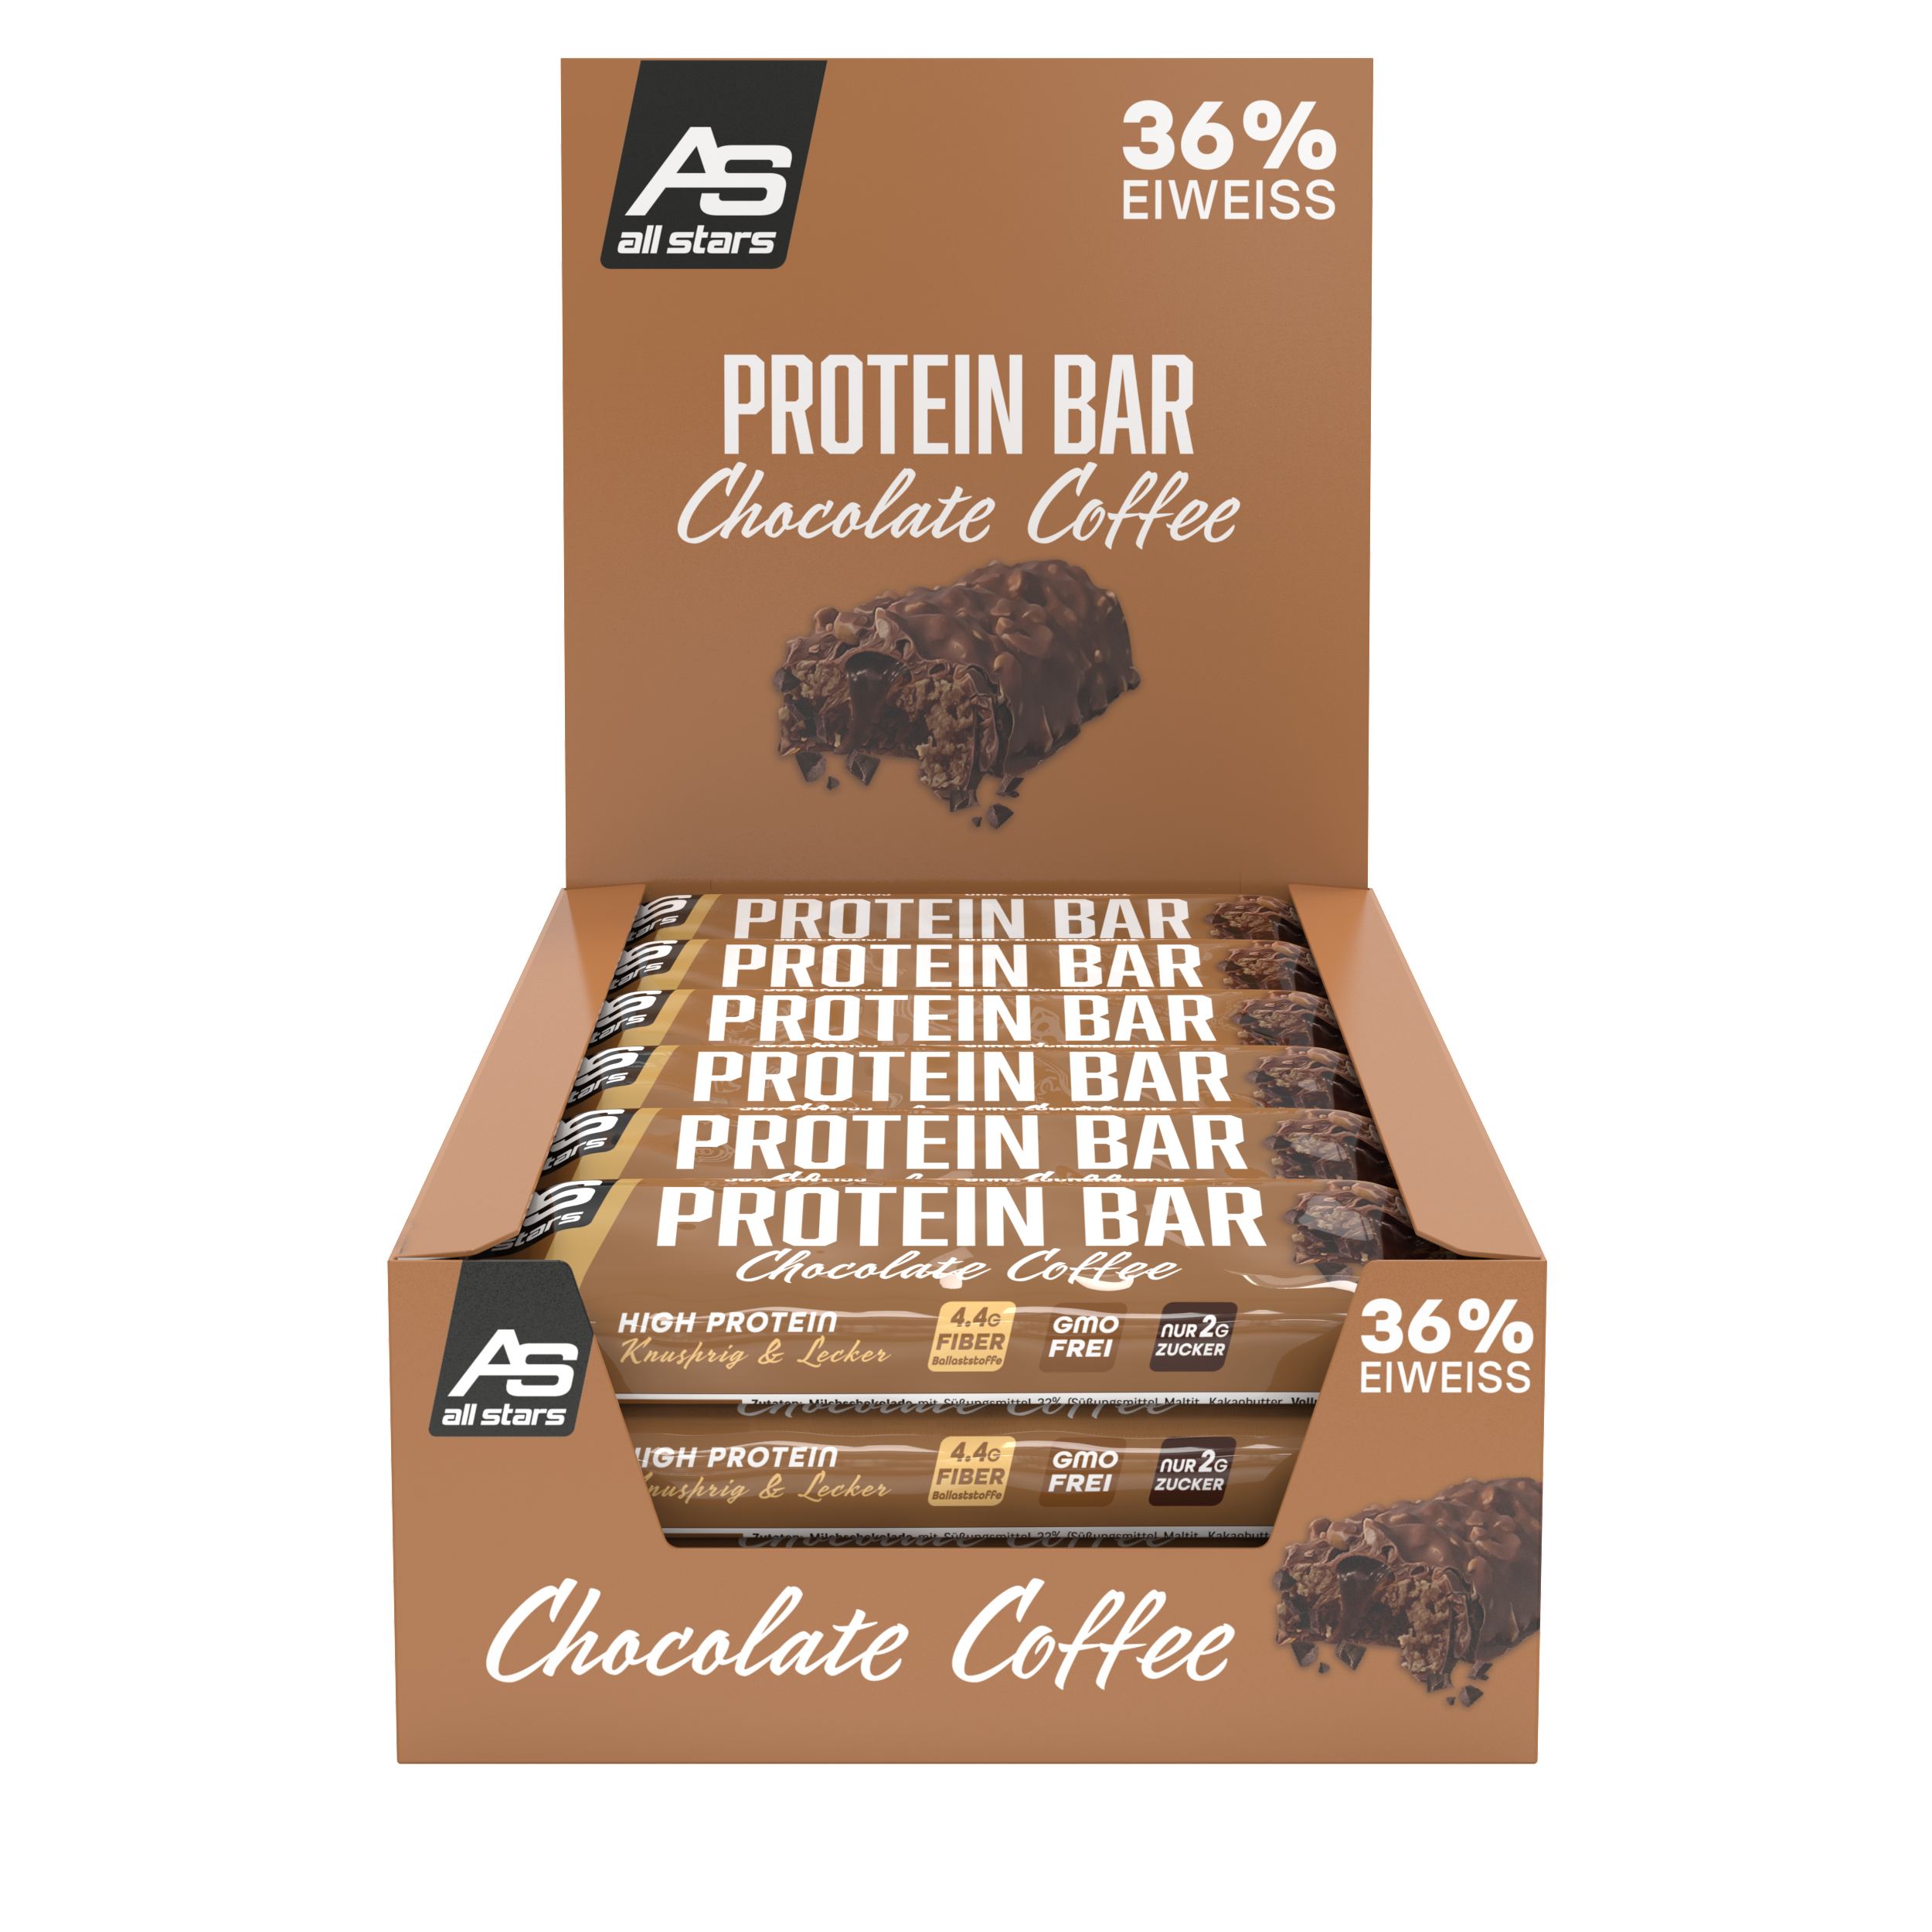 ALL STARS Protein Bar